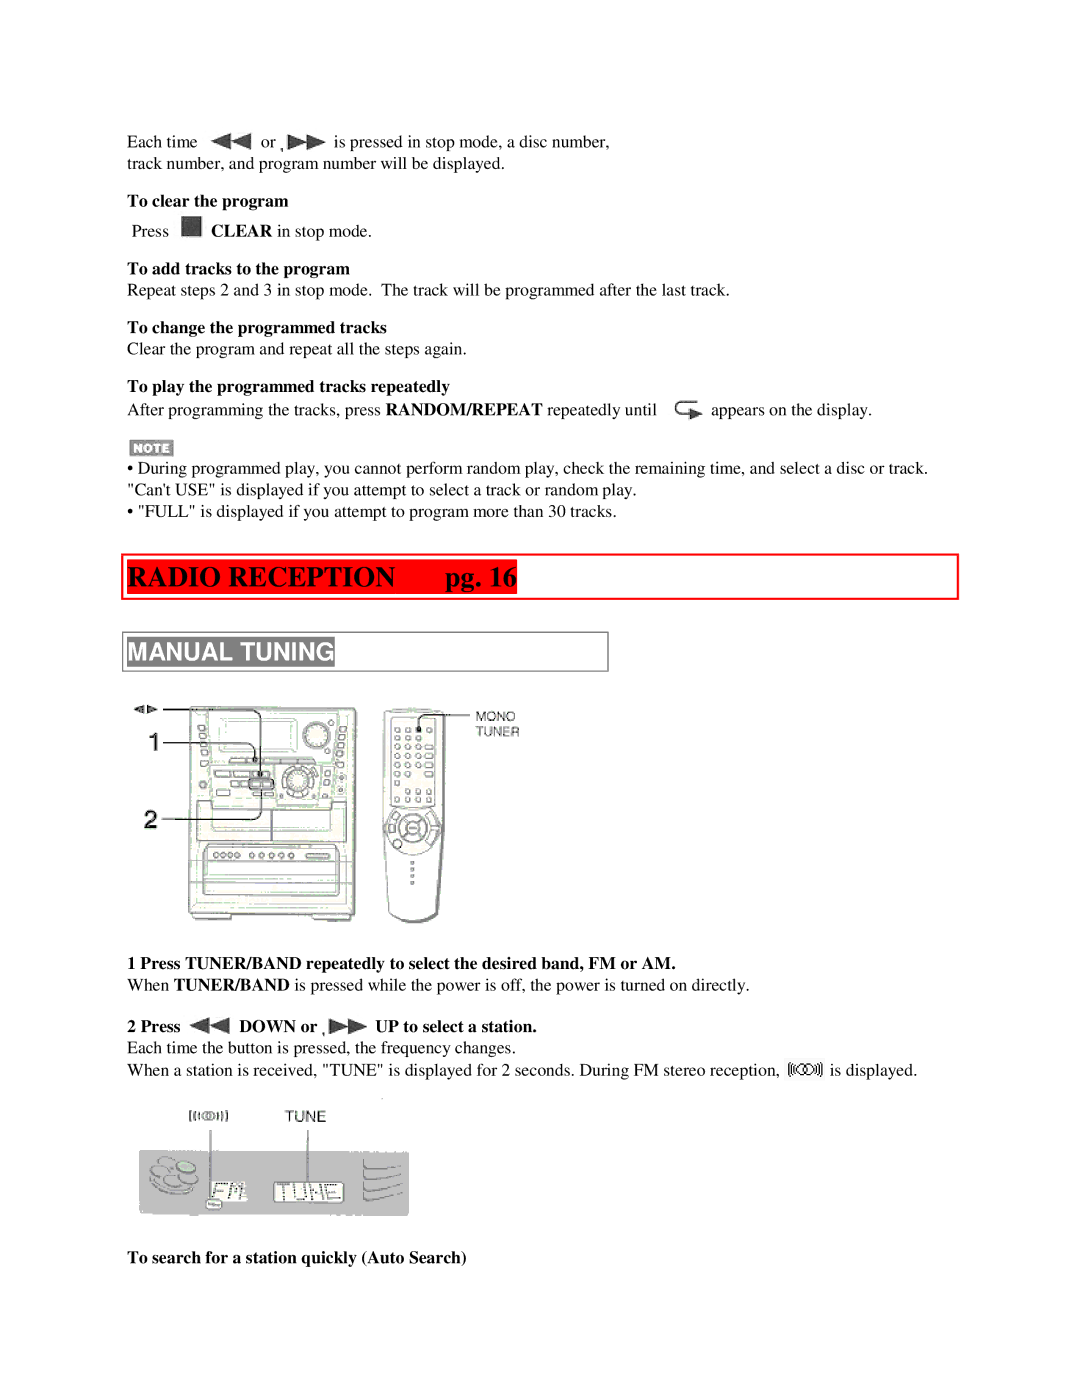 Aiwa NSX-MTD9 manual Radio Reception pg, Manual Tuning 